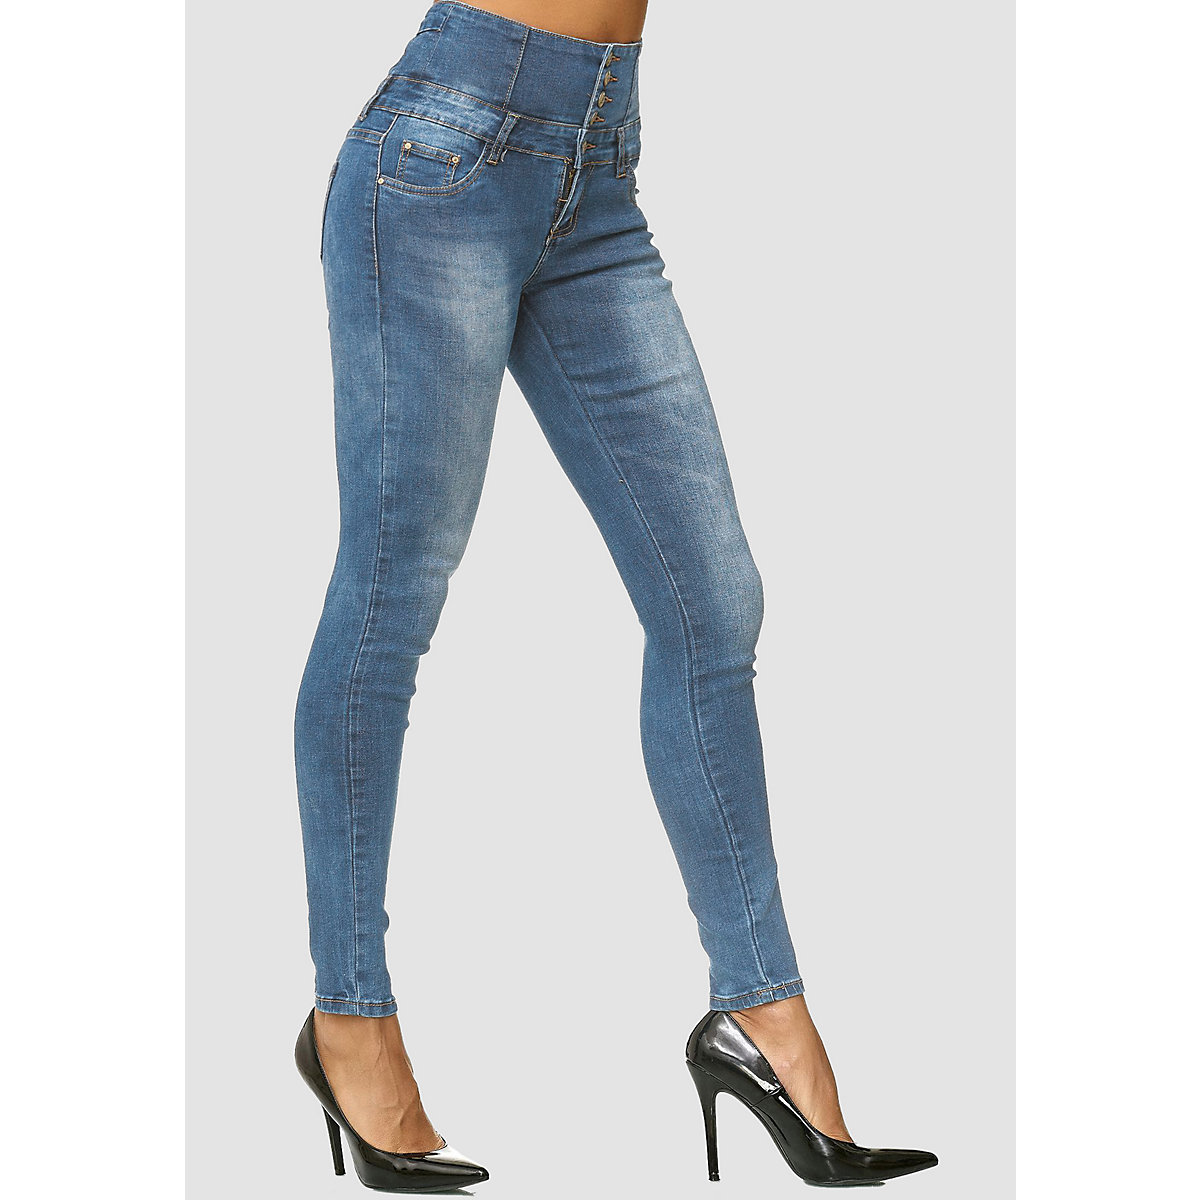 MiSS RJ Skinny Jeans Hose High Waist Demin Stretch Shaping Design blau Modell 2 OY10592